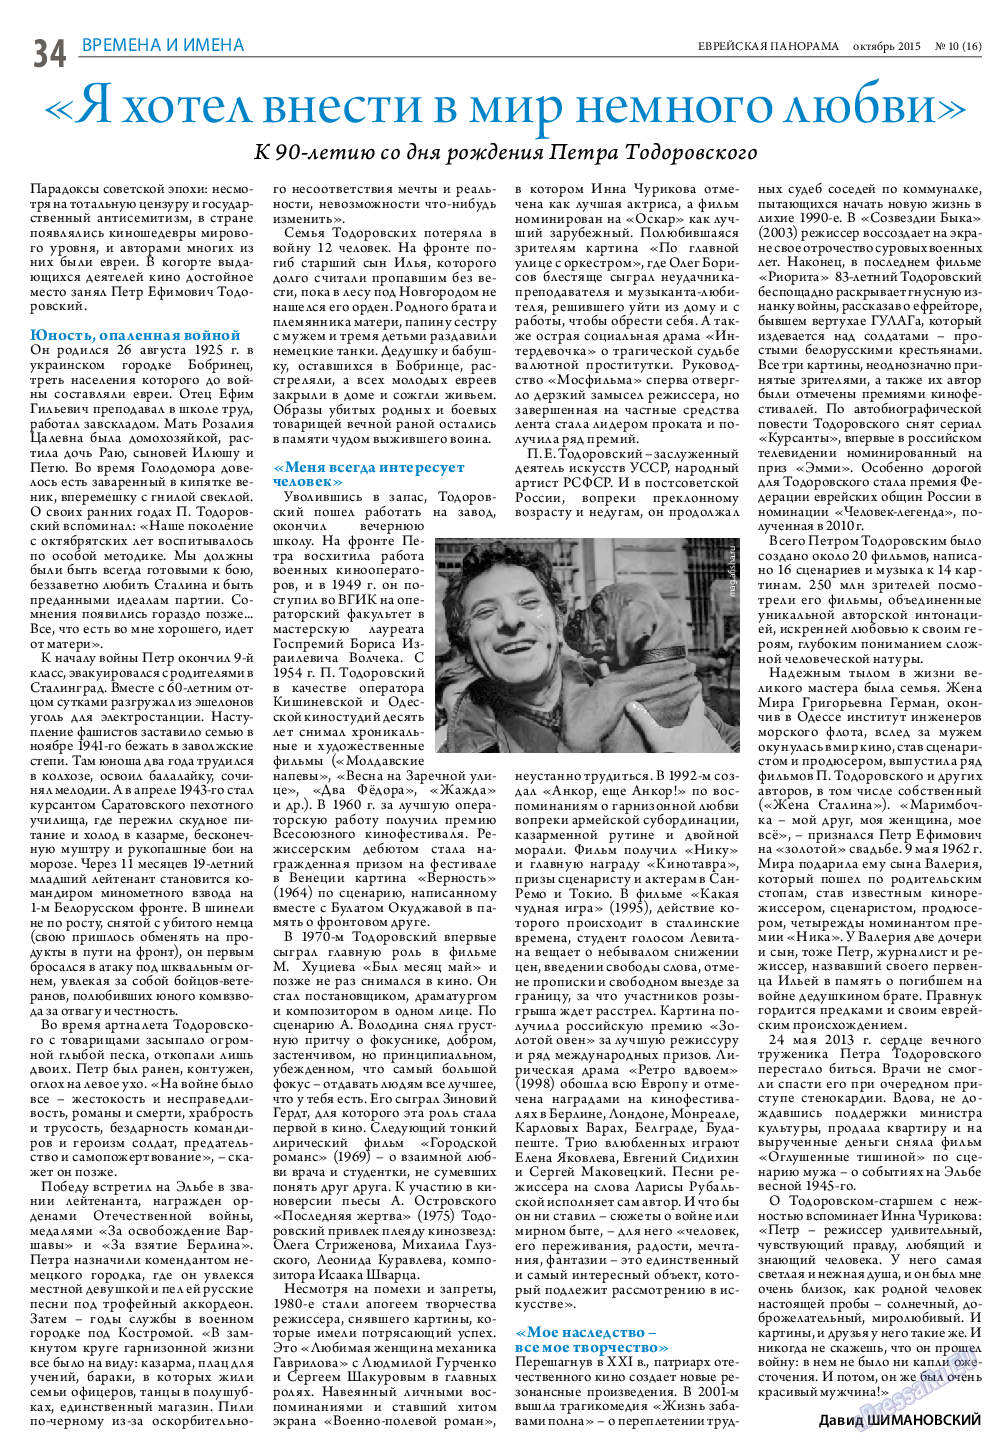 Еврейская панорама, газета. 2015 №10 стр.34